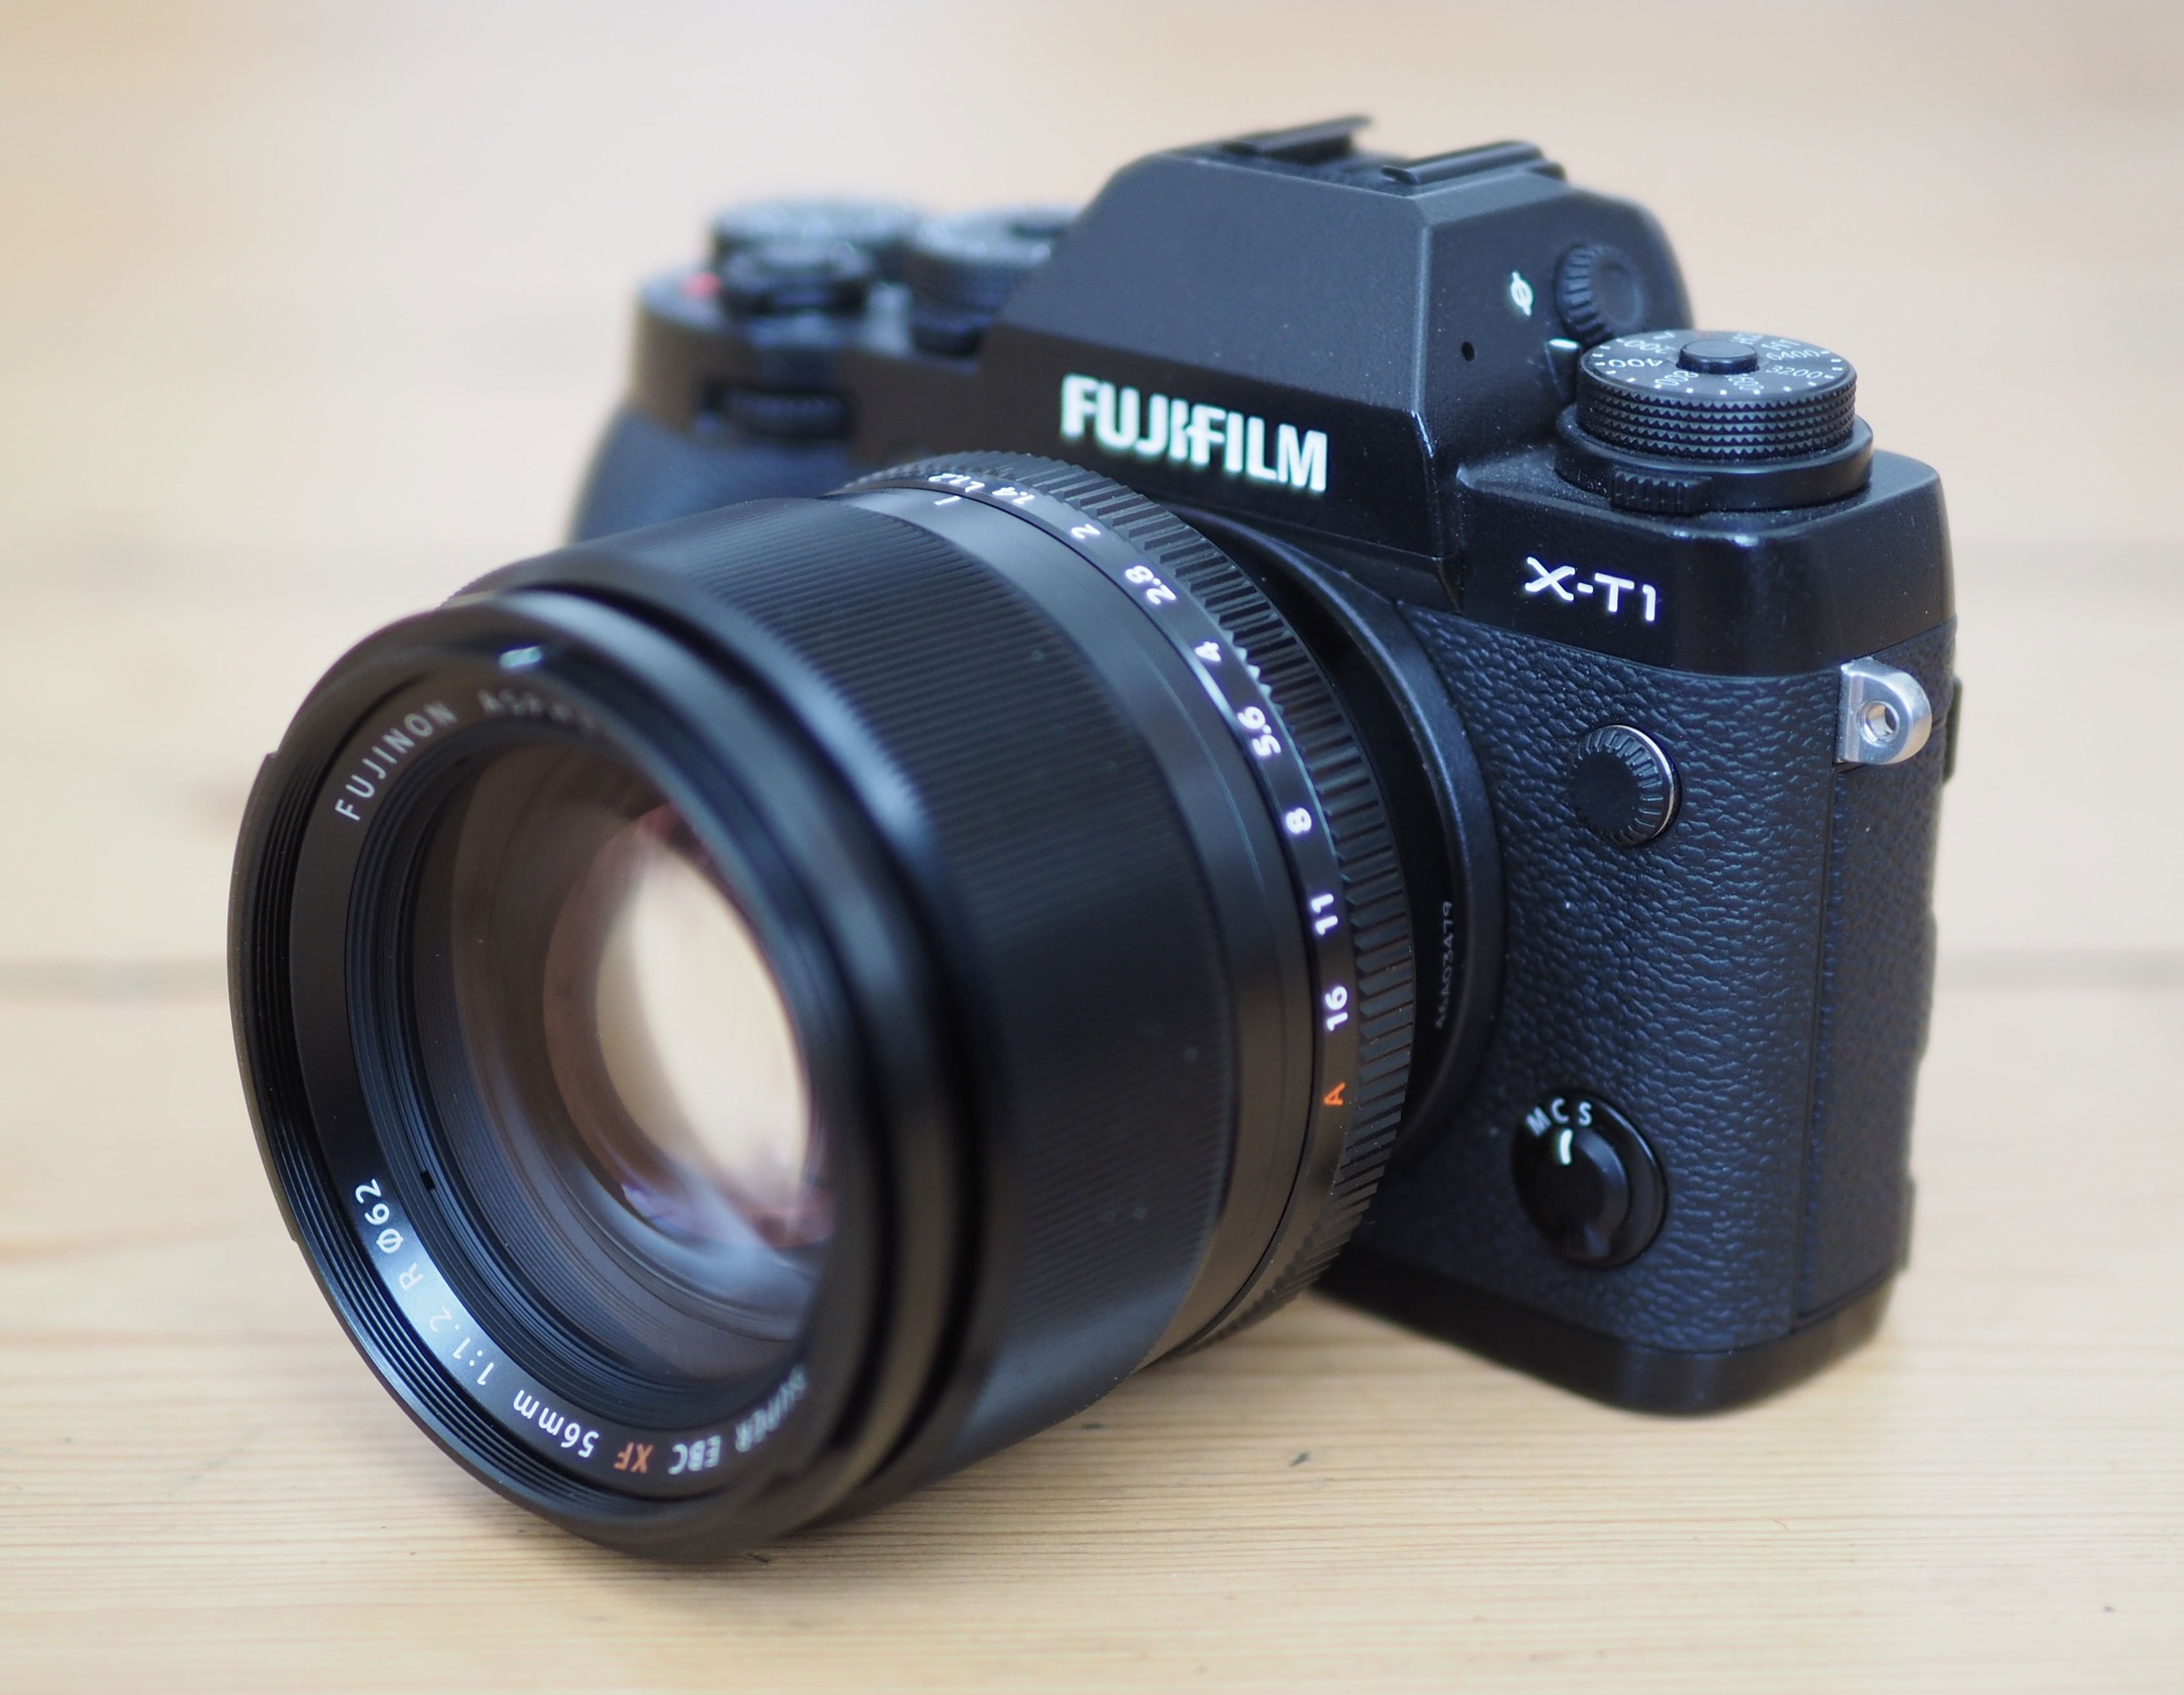 Fujifilm XT1 | Cameralabs